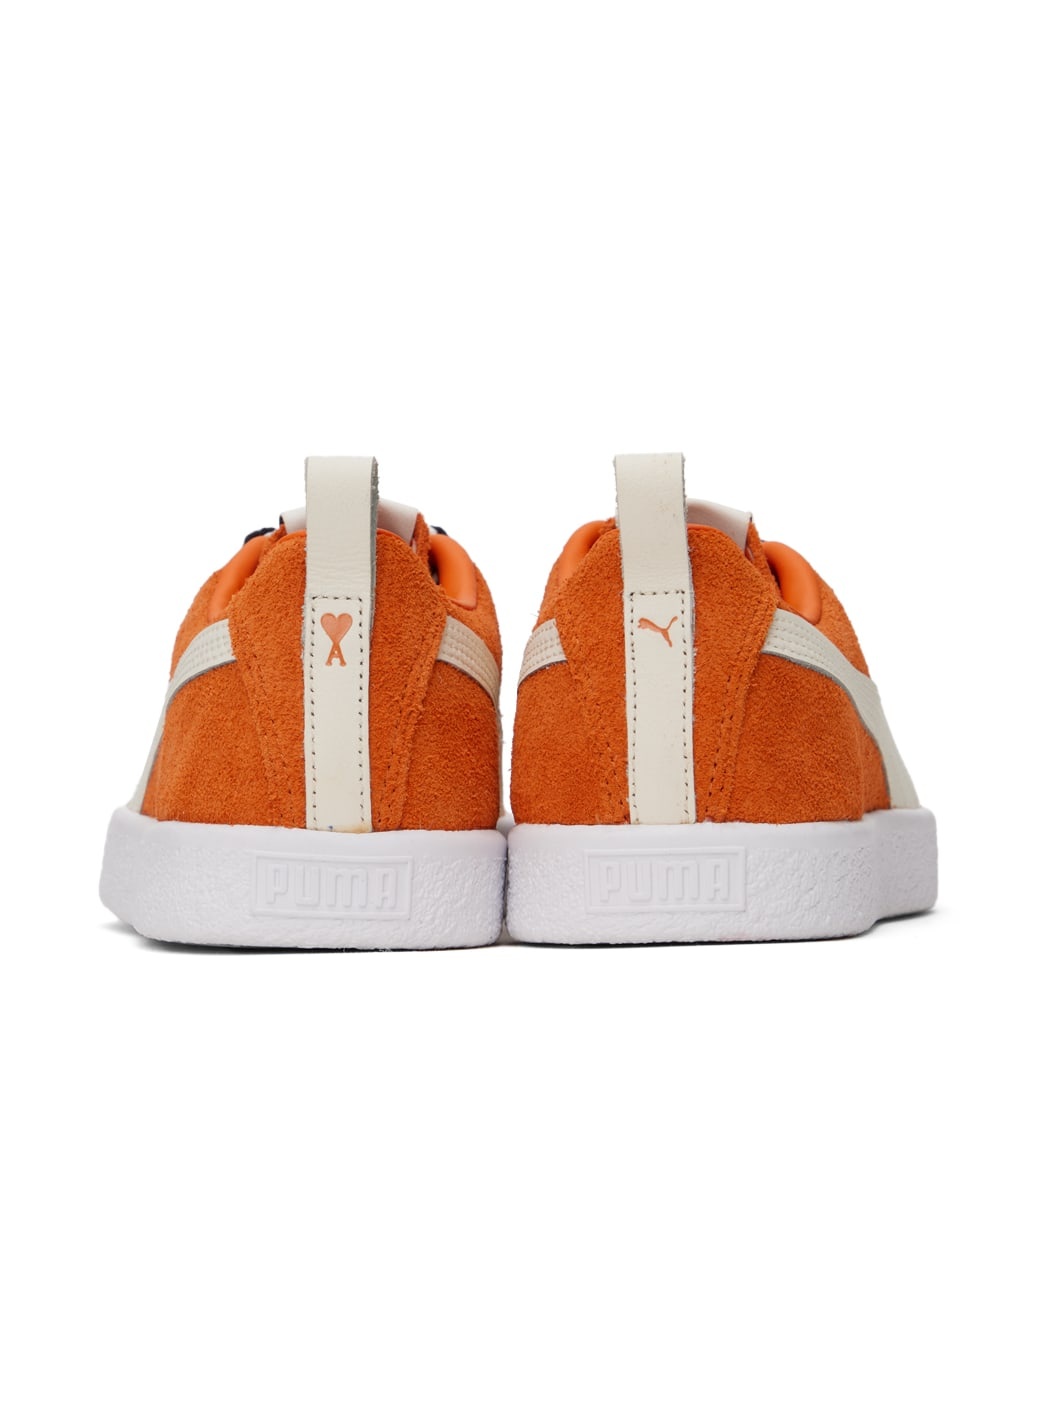 Orange Puma Edition VTG Sneakers - 2